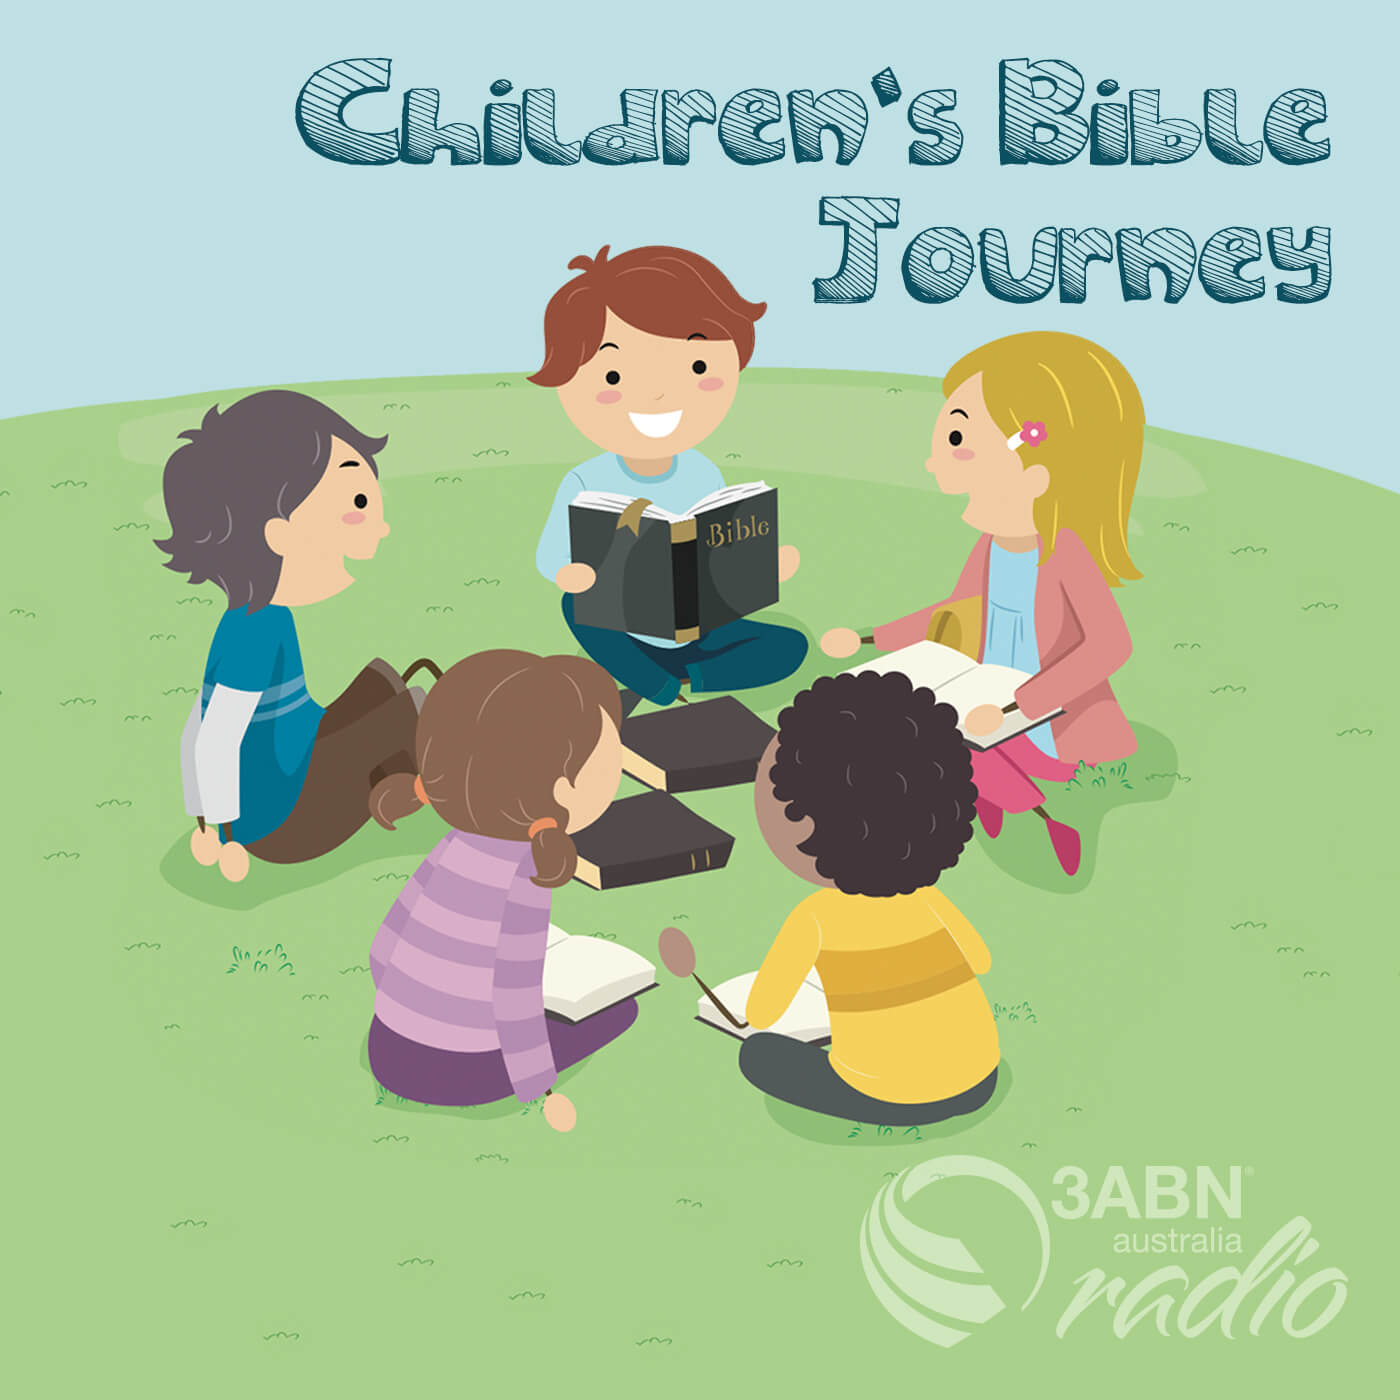 Children's Bible Journey - 2135